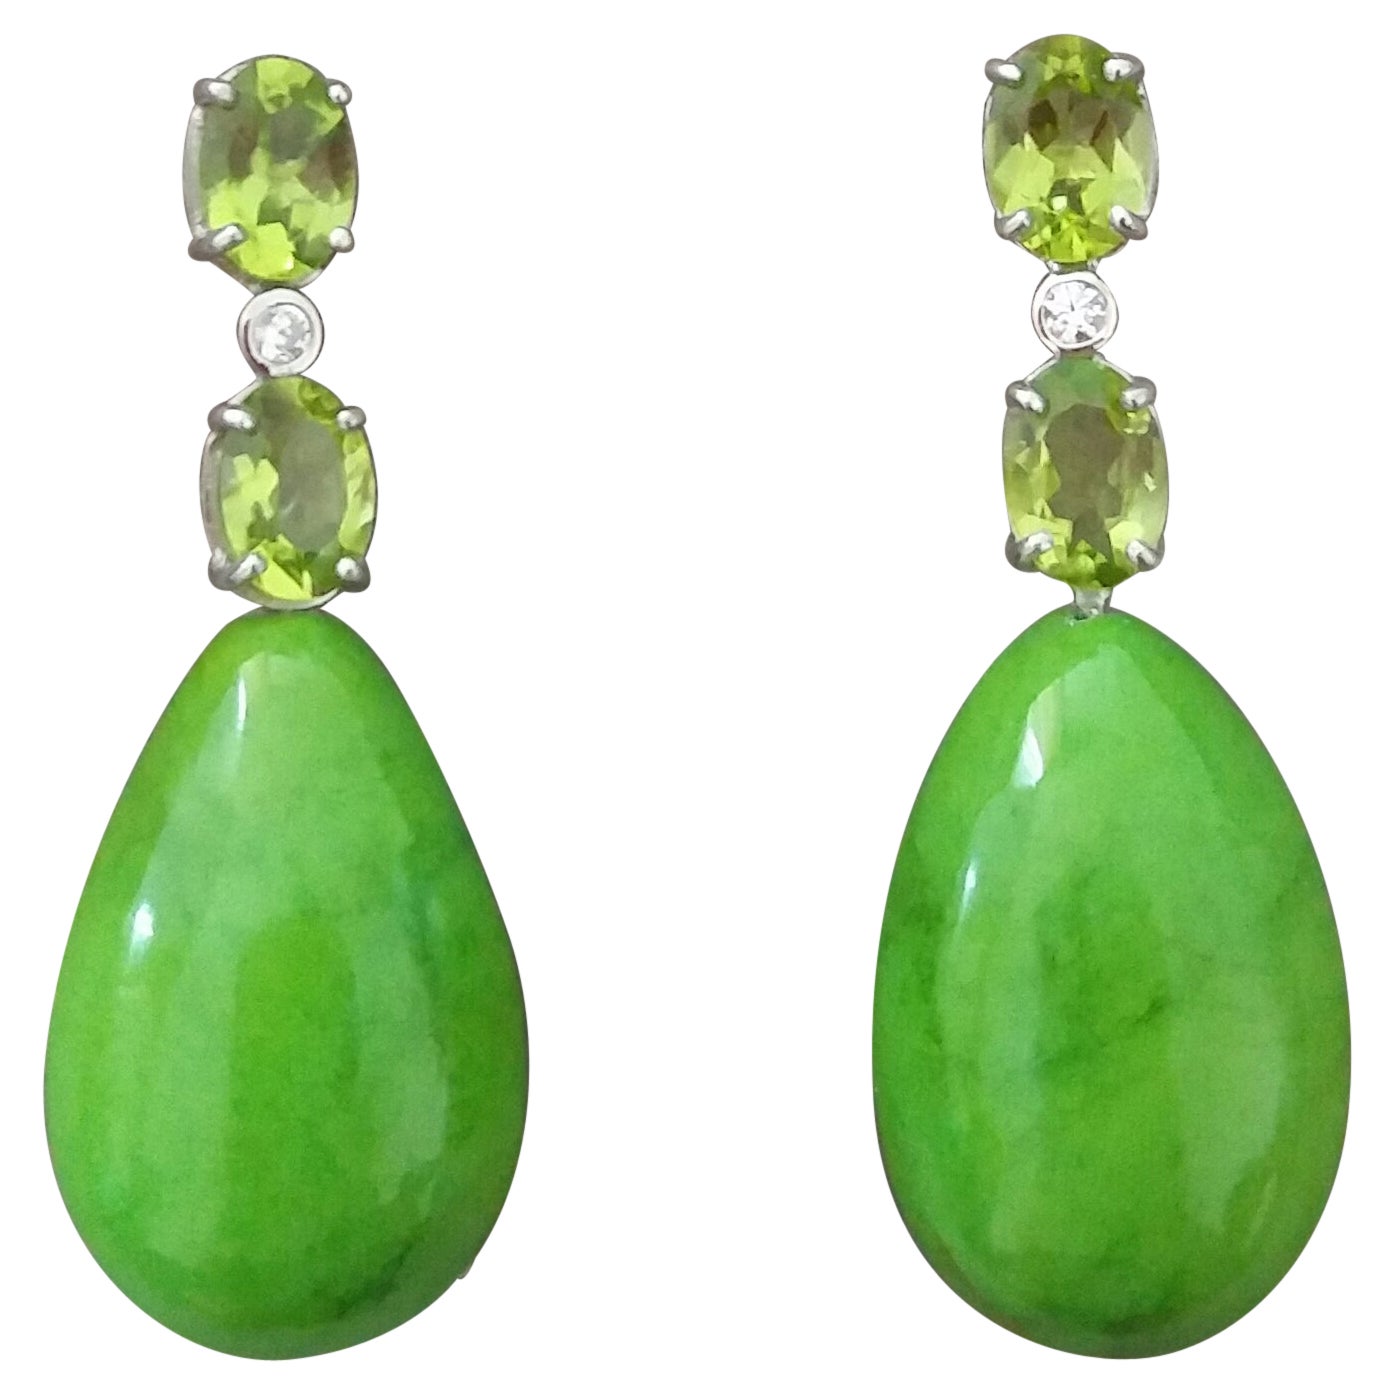 2 ovale Peridot-Ohrringe aus Gold mit Diamanten 2 grünen Türkis-Tropfen